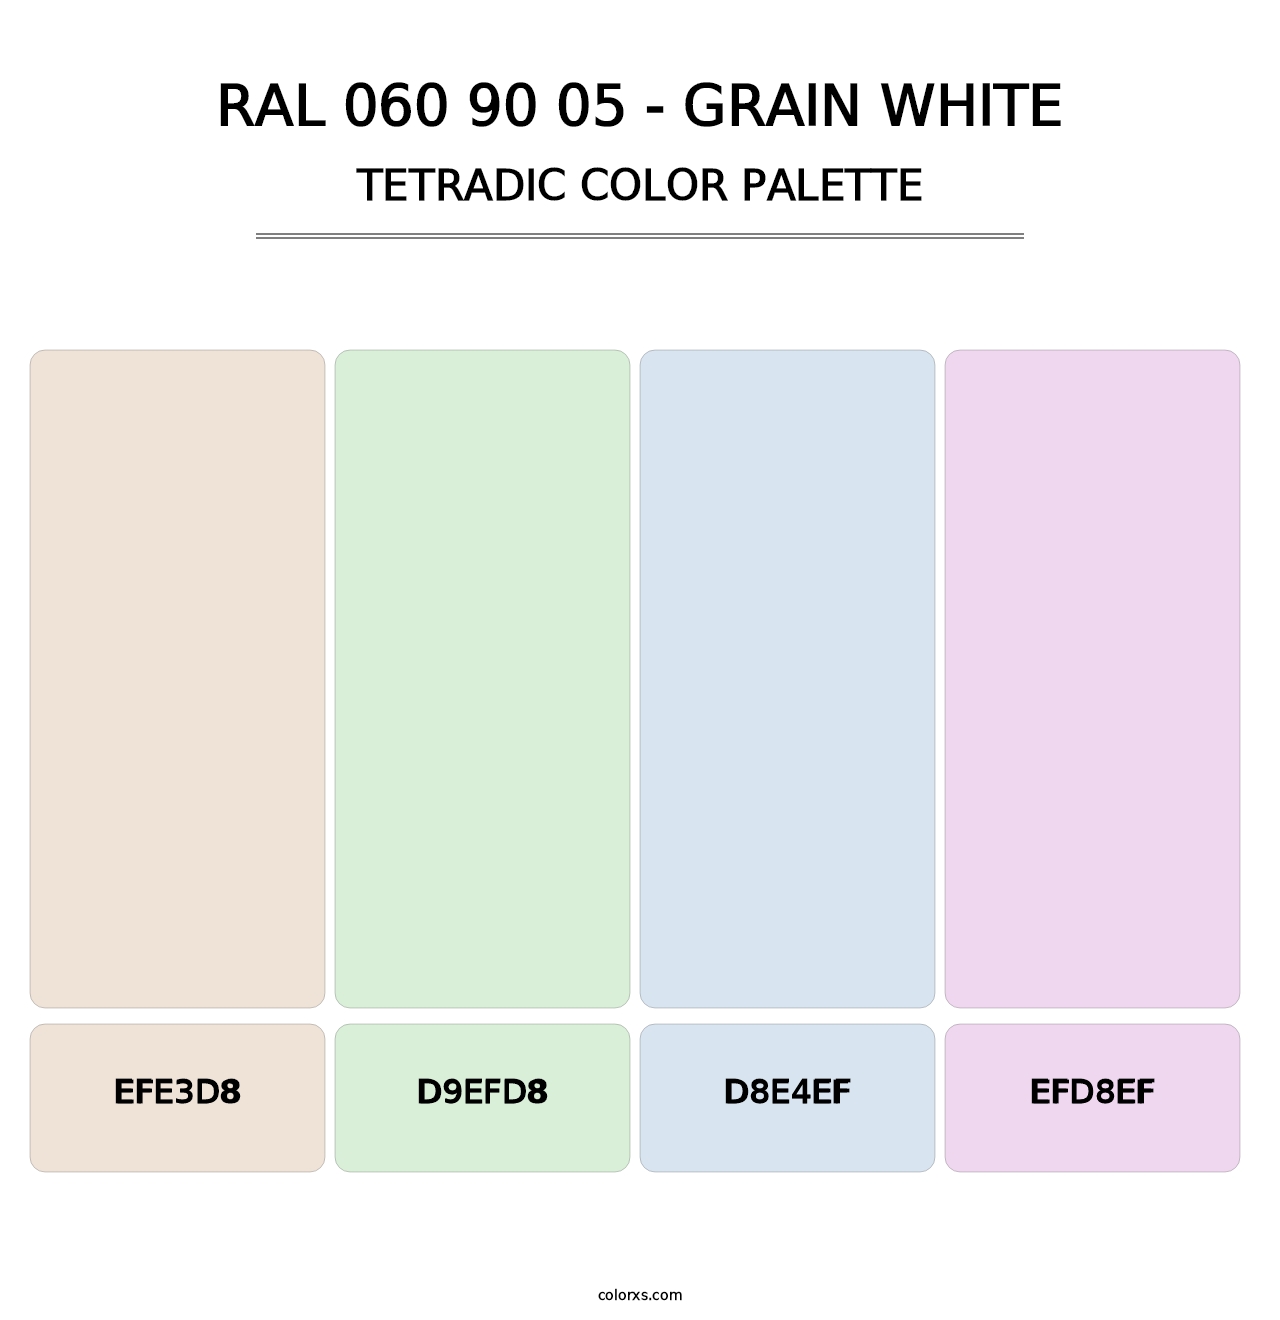 RAL 060 90 05 - Grain White - Tetradic Color Palette